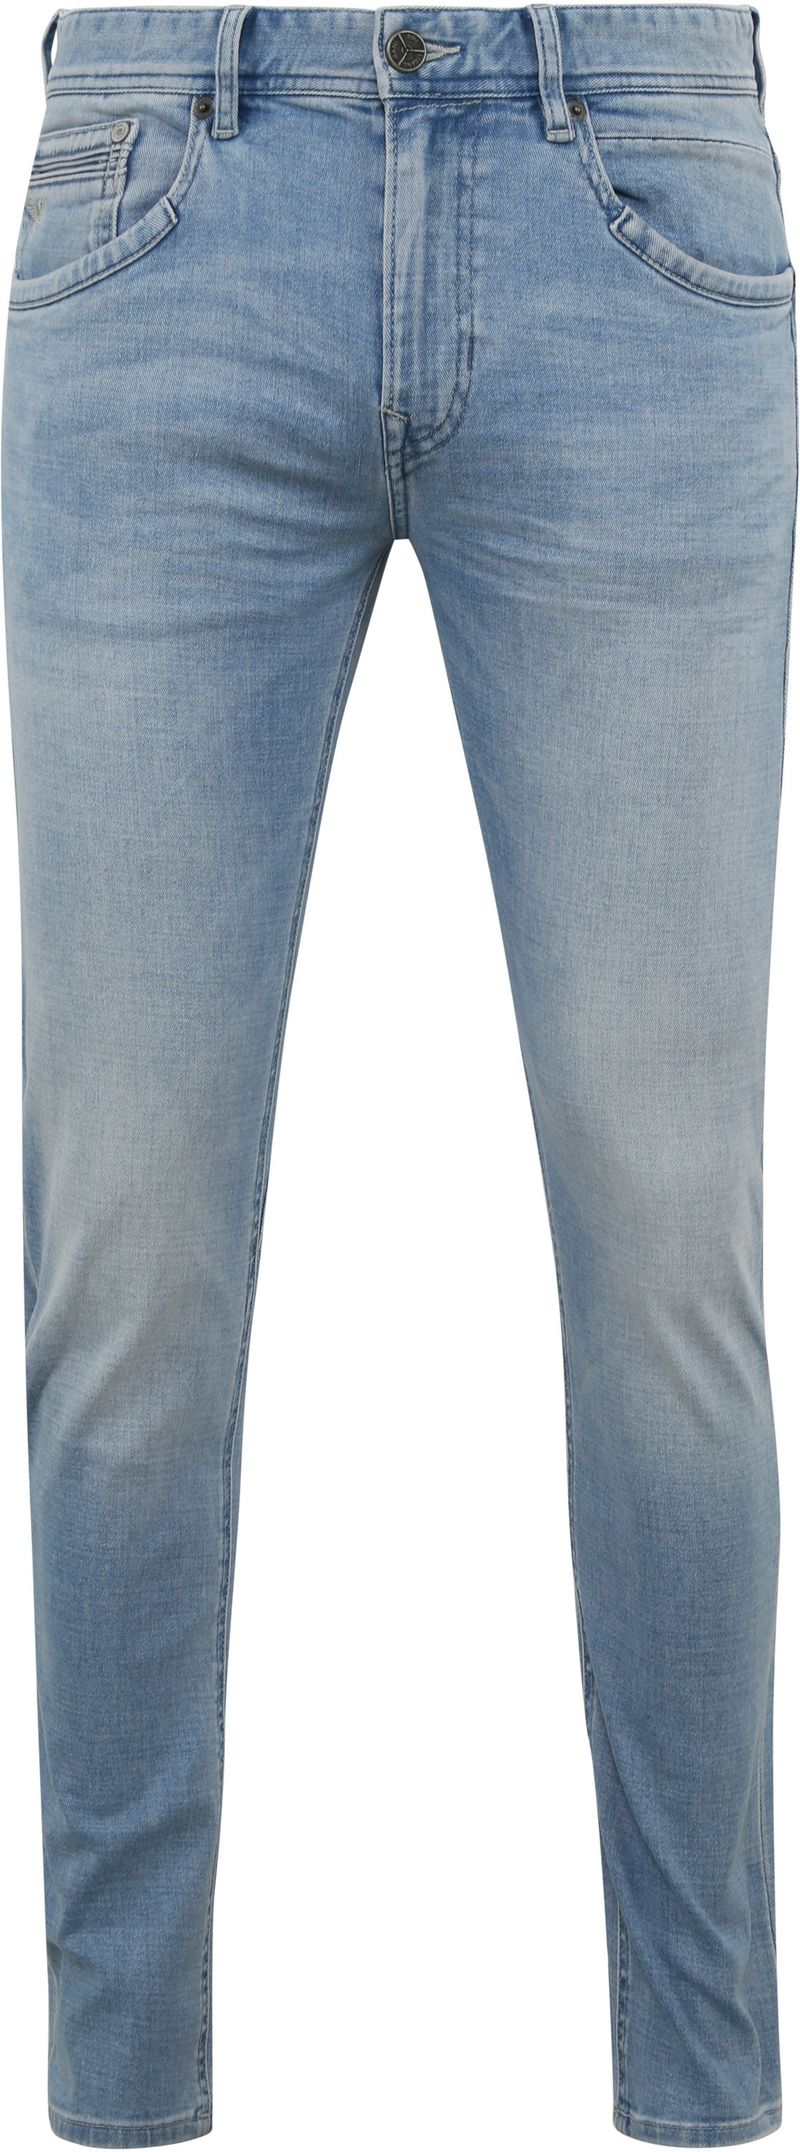 PME Legend Tailwheel Jeans Hellblau CLB - Größe W 40 - L 32 von PME Legend